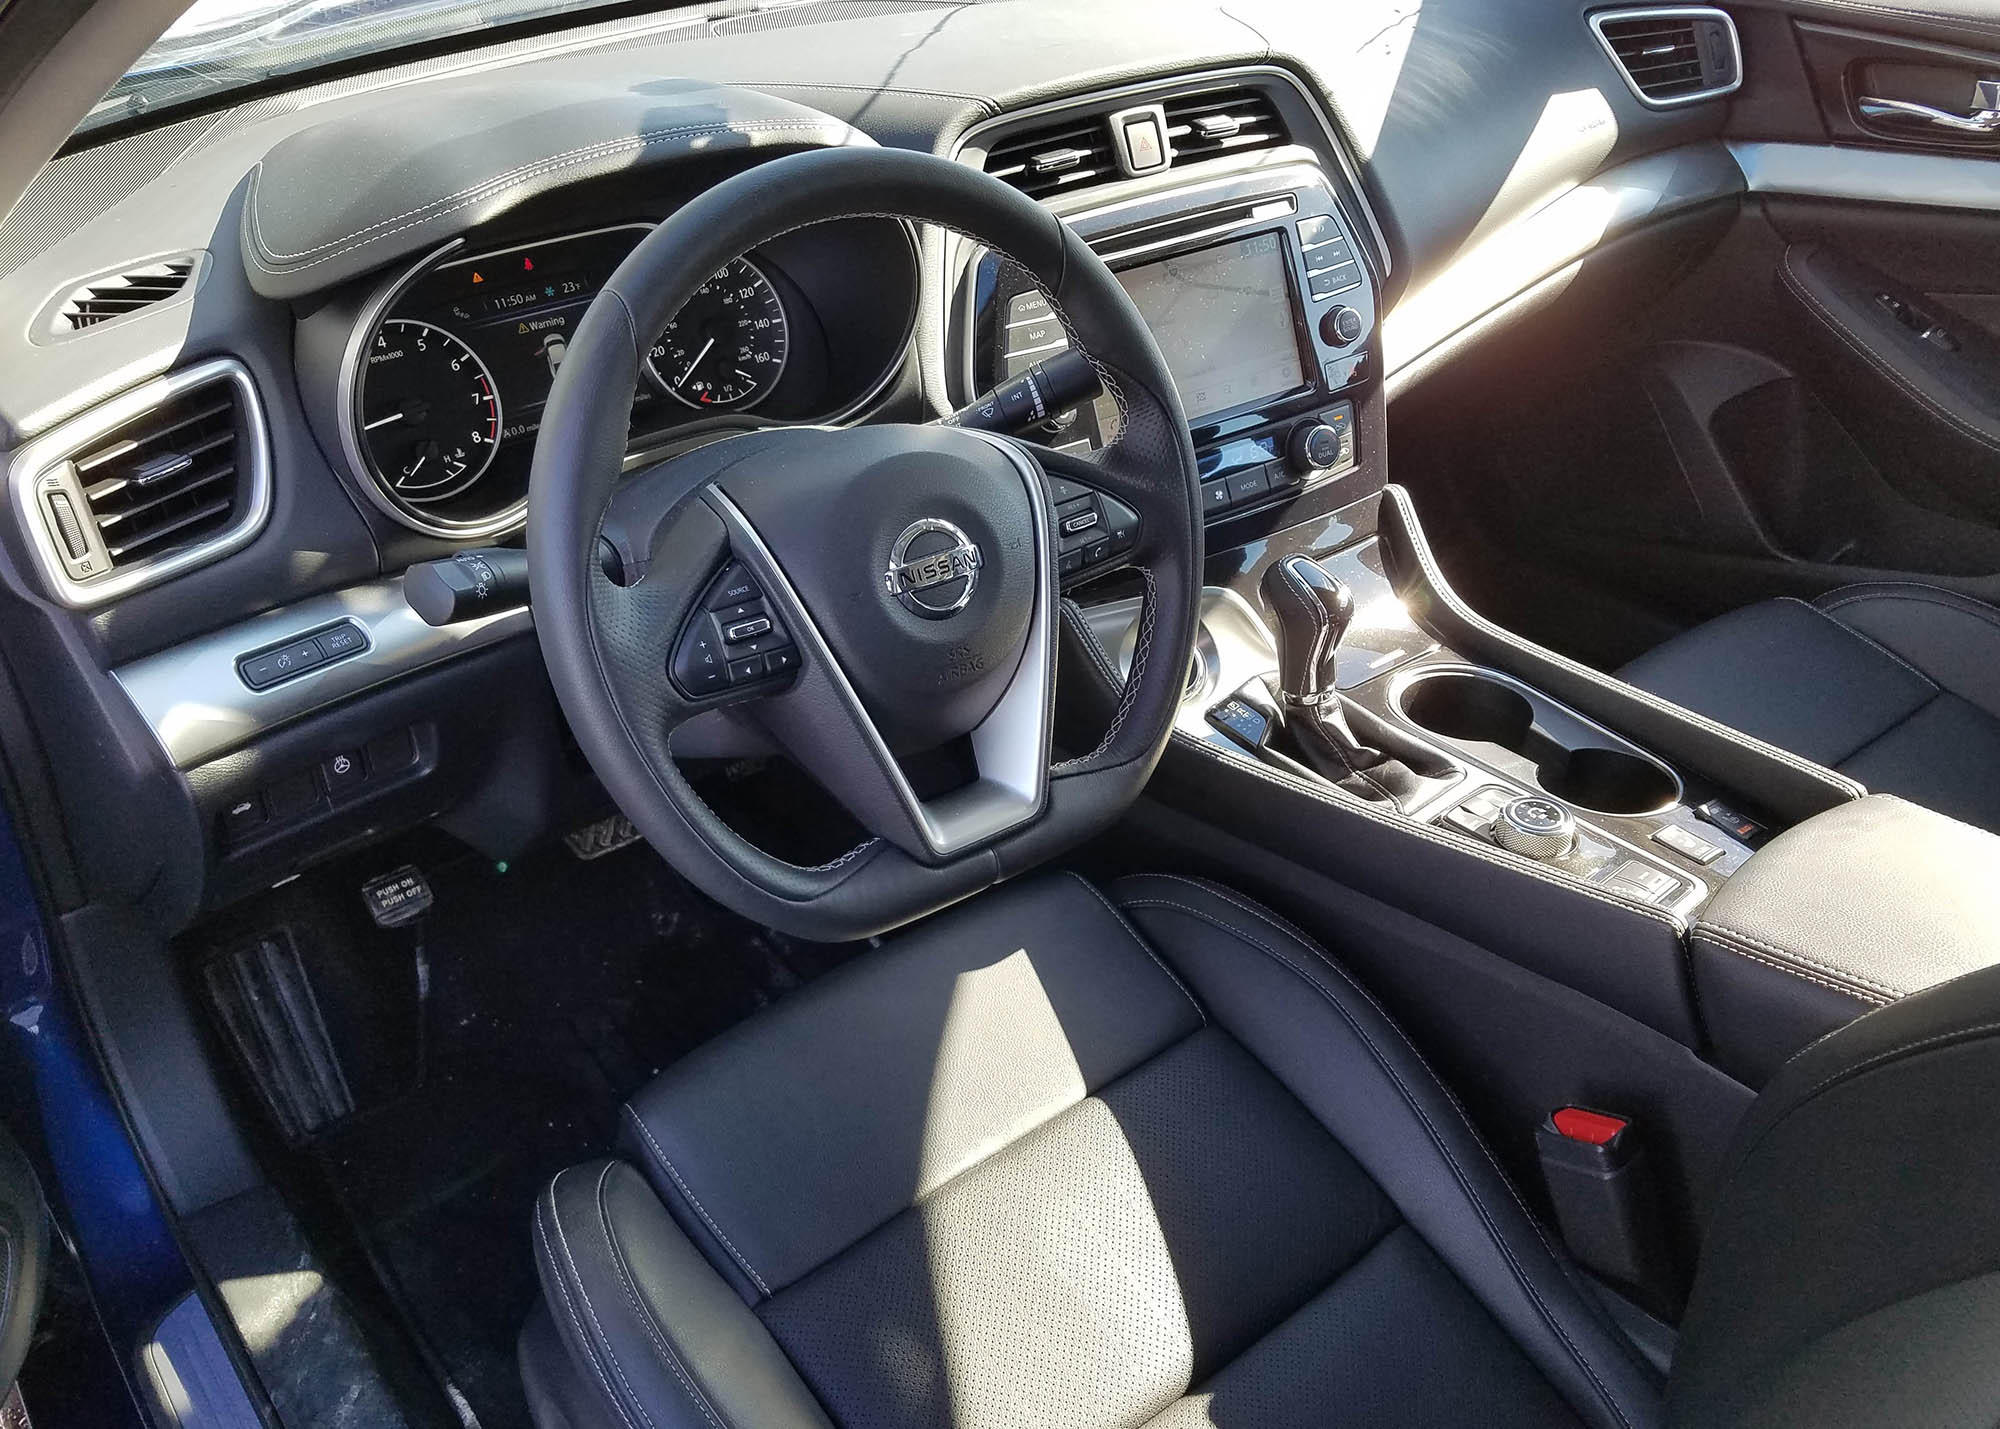 2019 Nissan Maxima Sl Review Near Luxury Sedan Loaded With